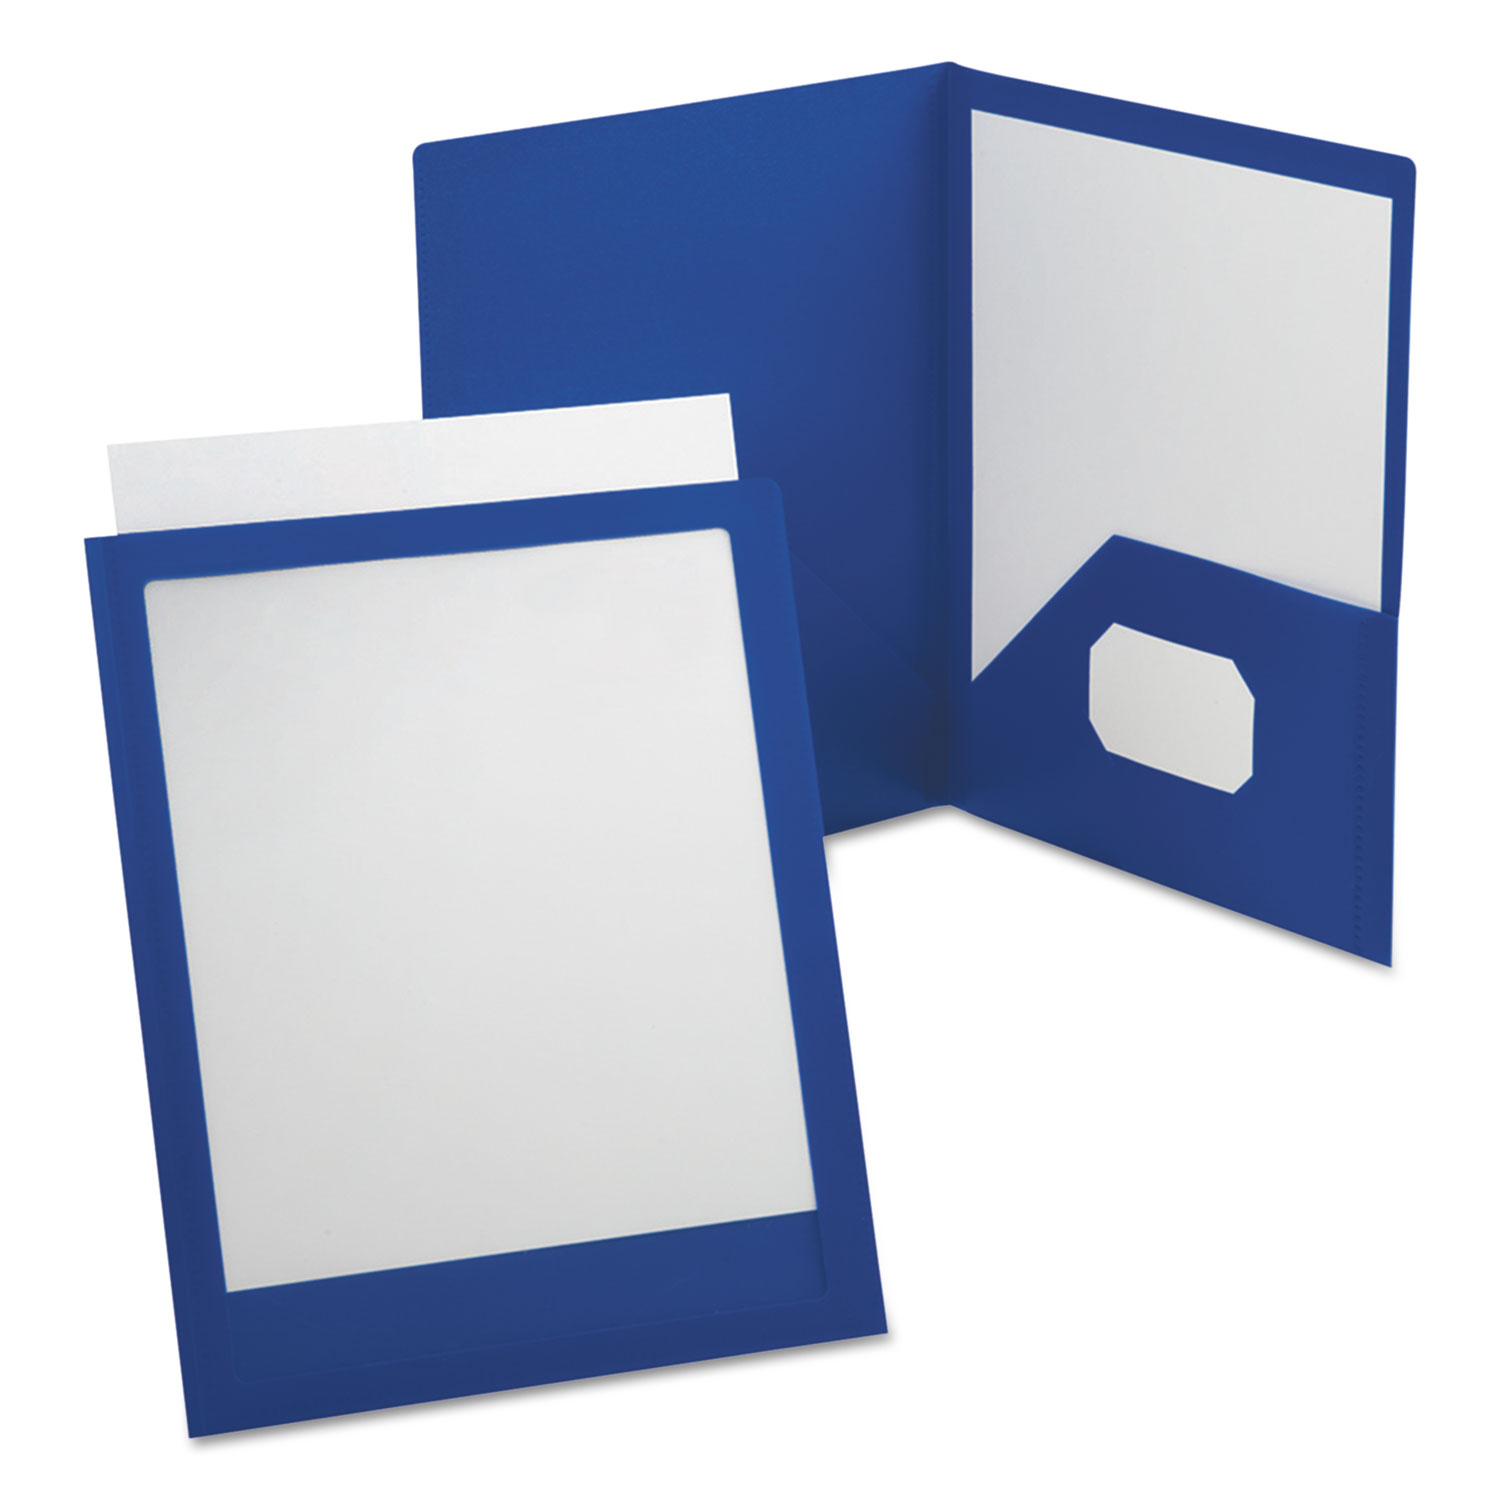 ViewFolio Polypropylene Portfolio, 100-Sheet Capacity, Blue/Clear